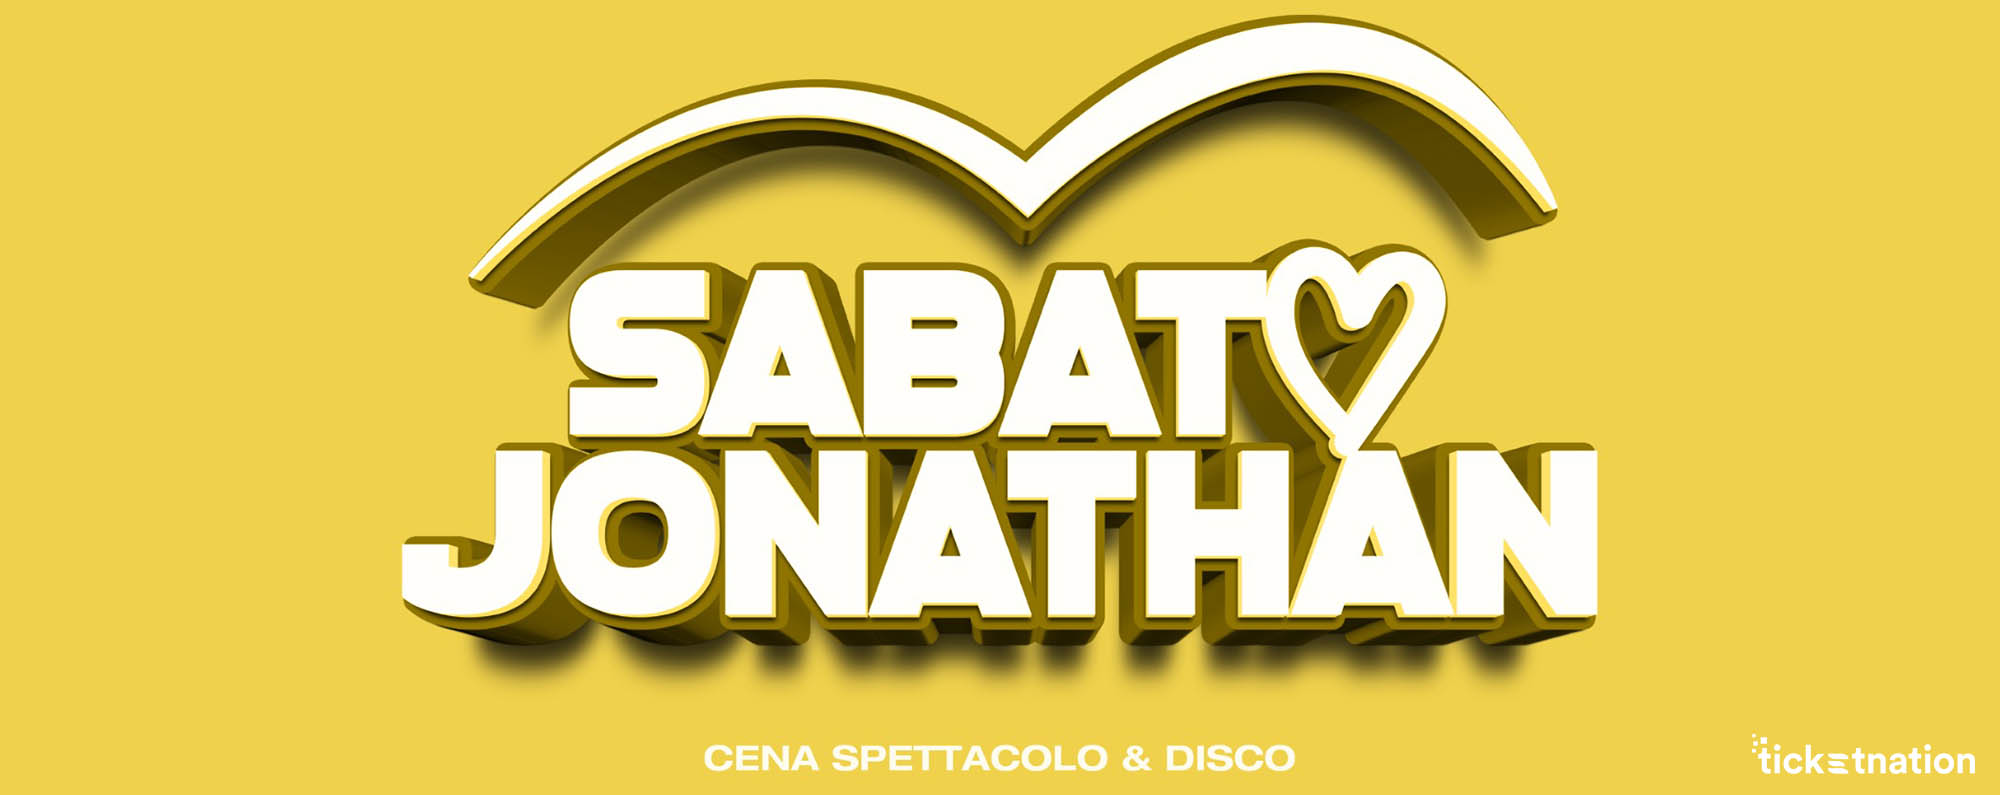 jonathan-discoteca-gialla